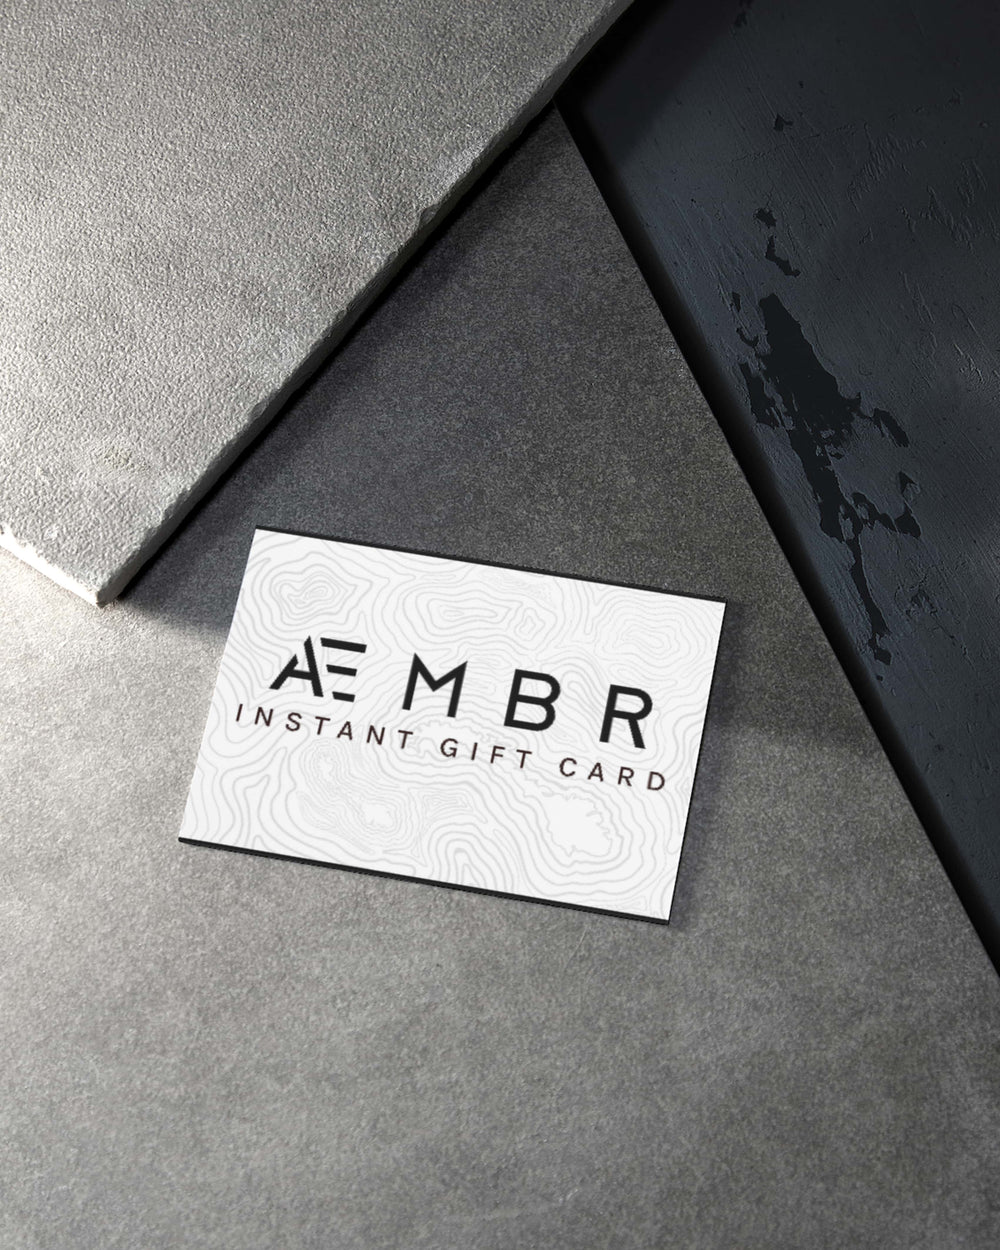 AEMBR GIFT CARD